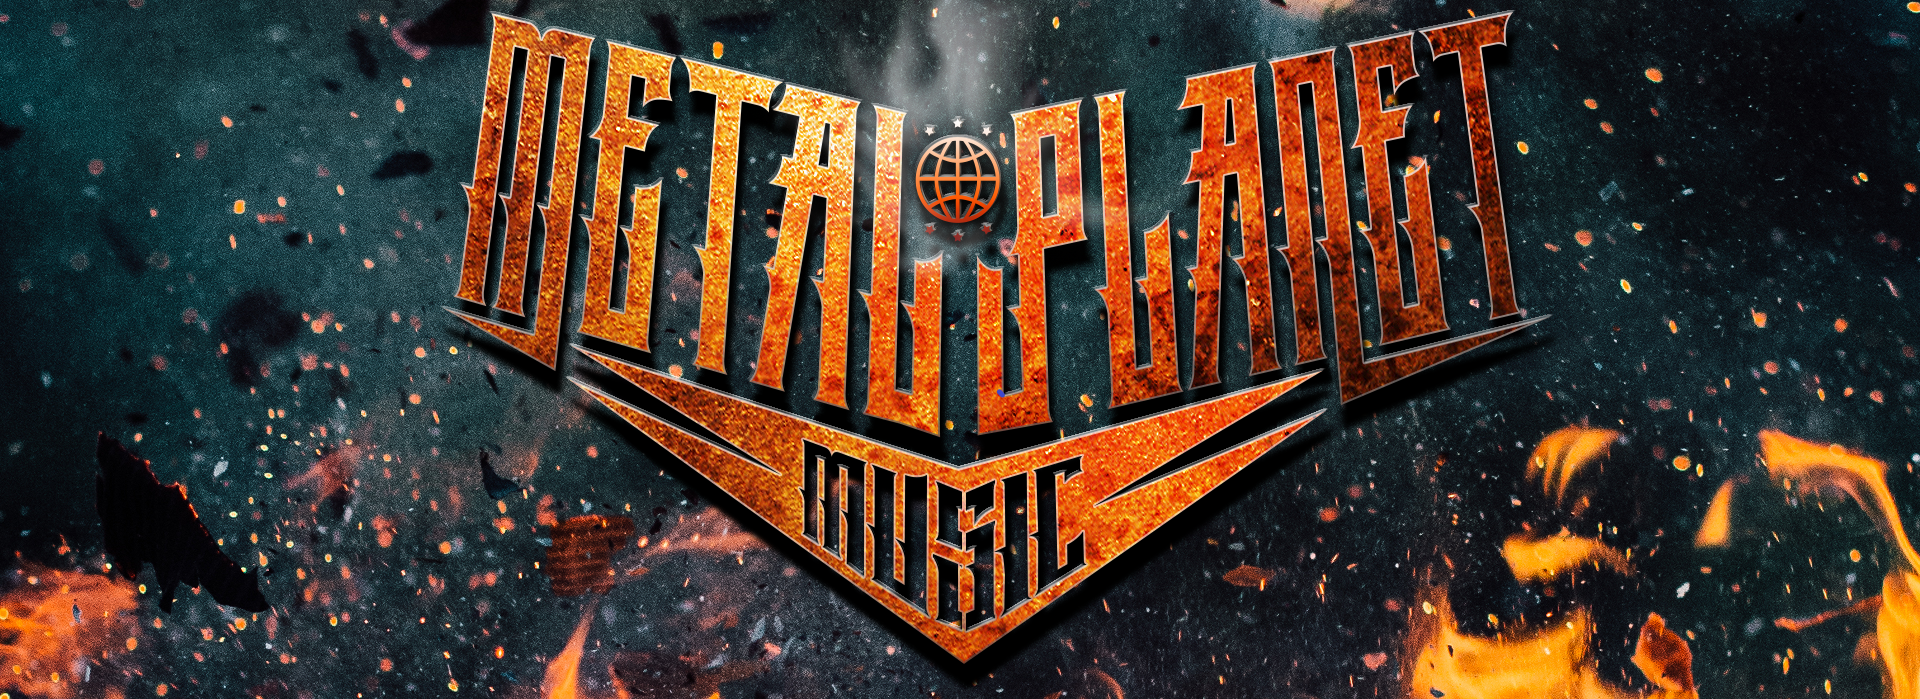 Metal Planet Music